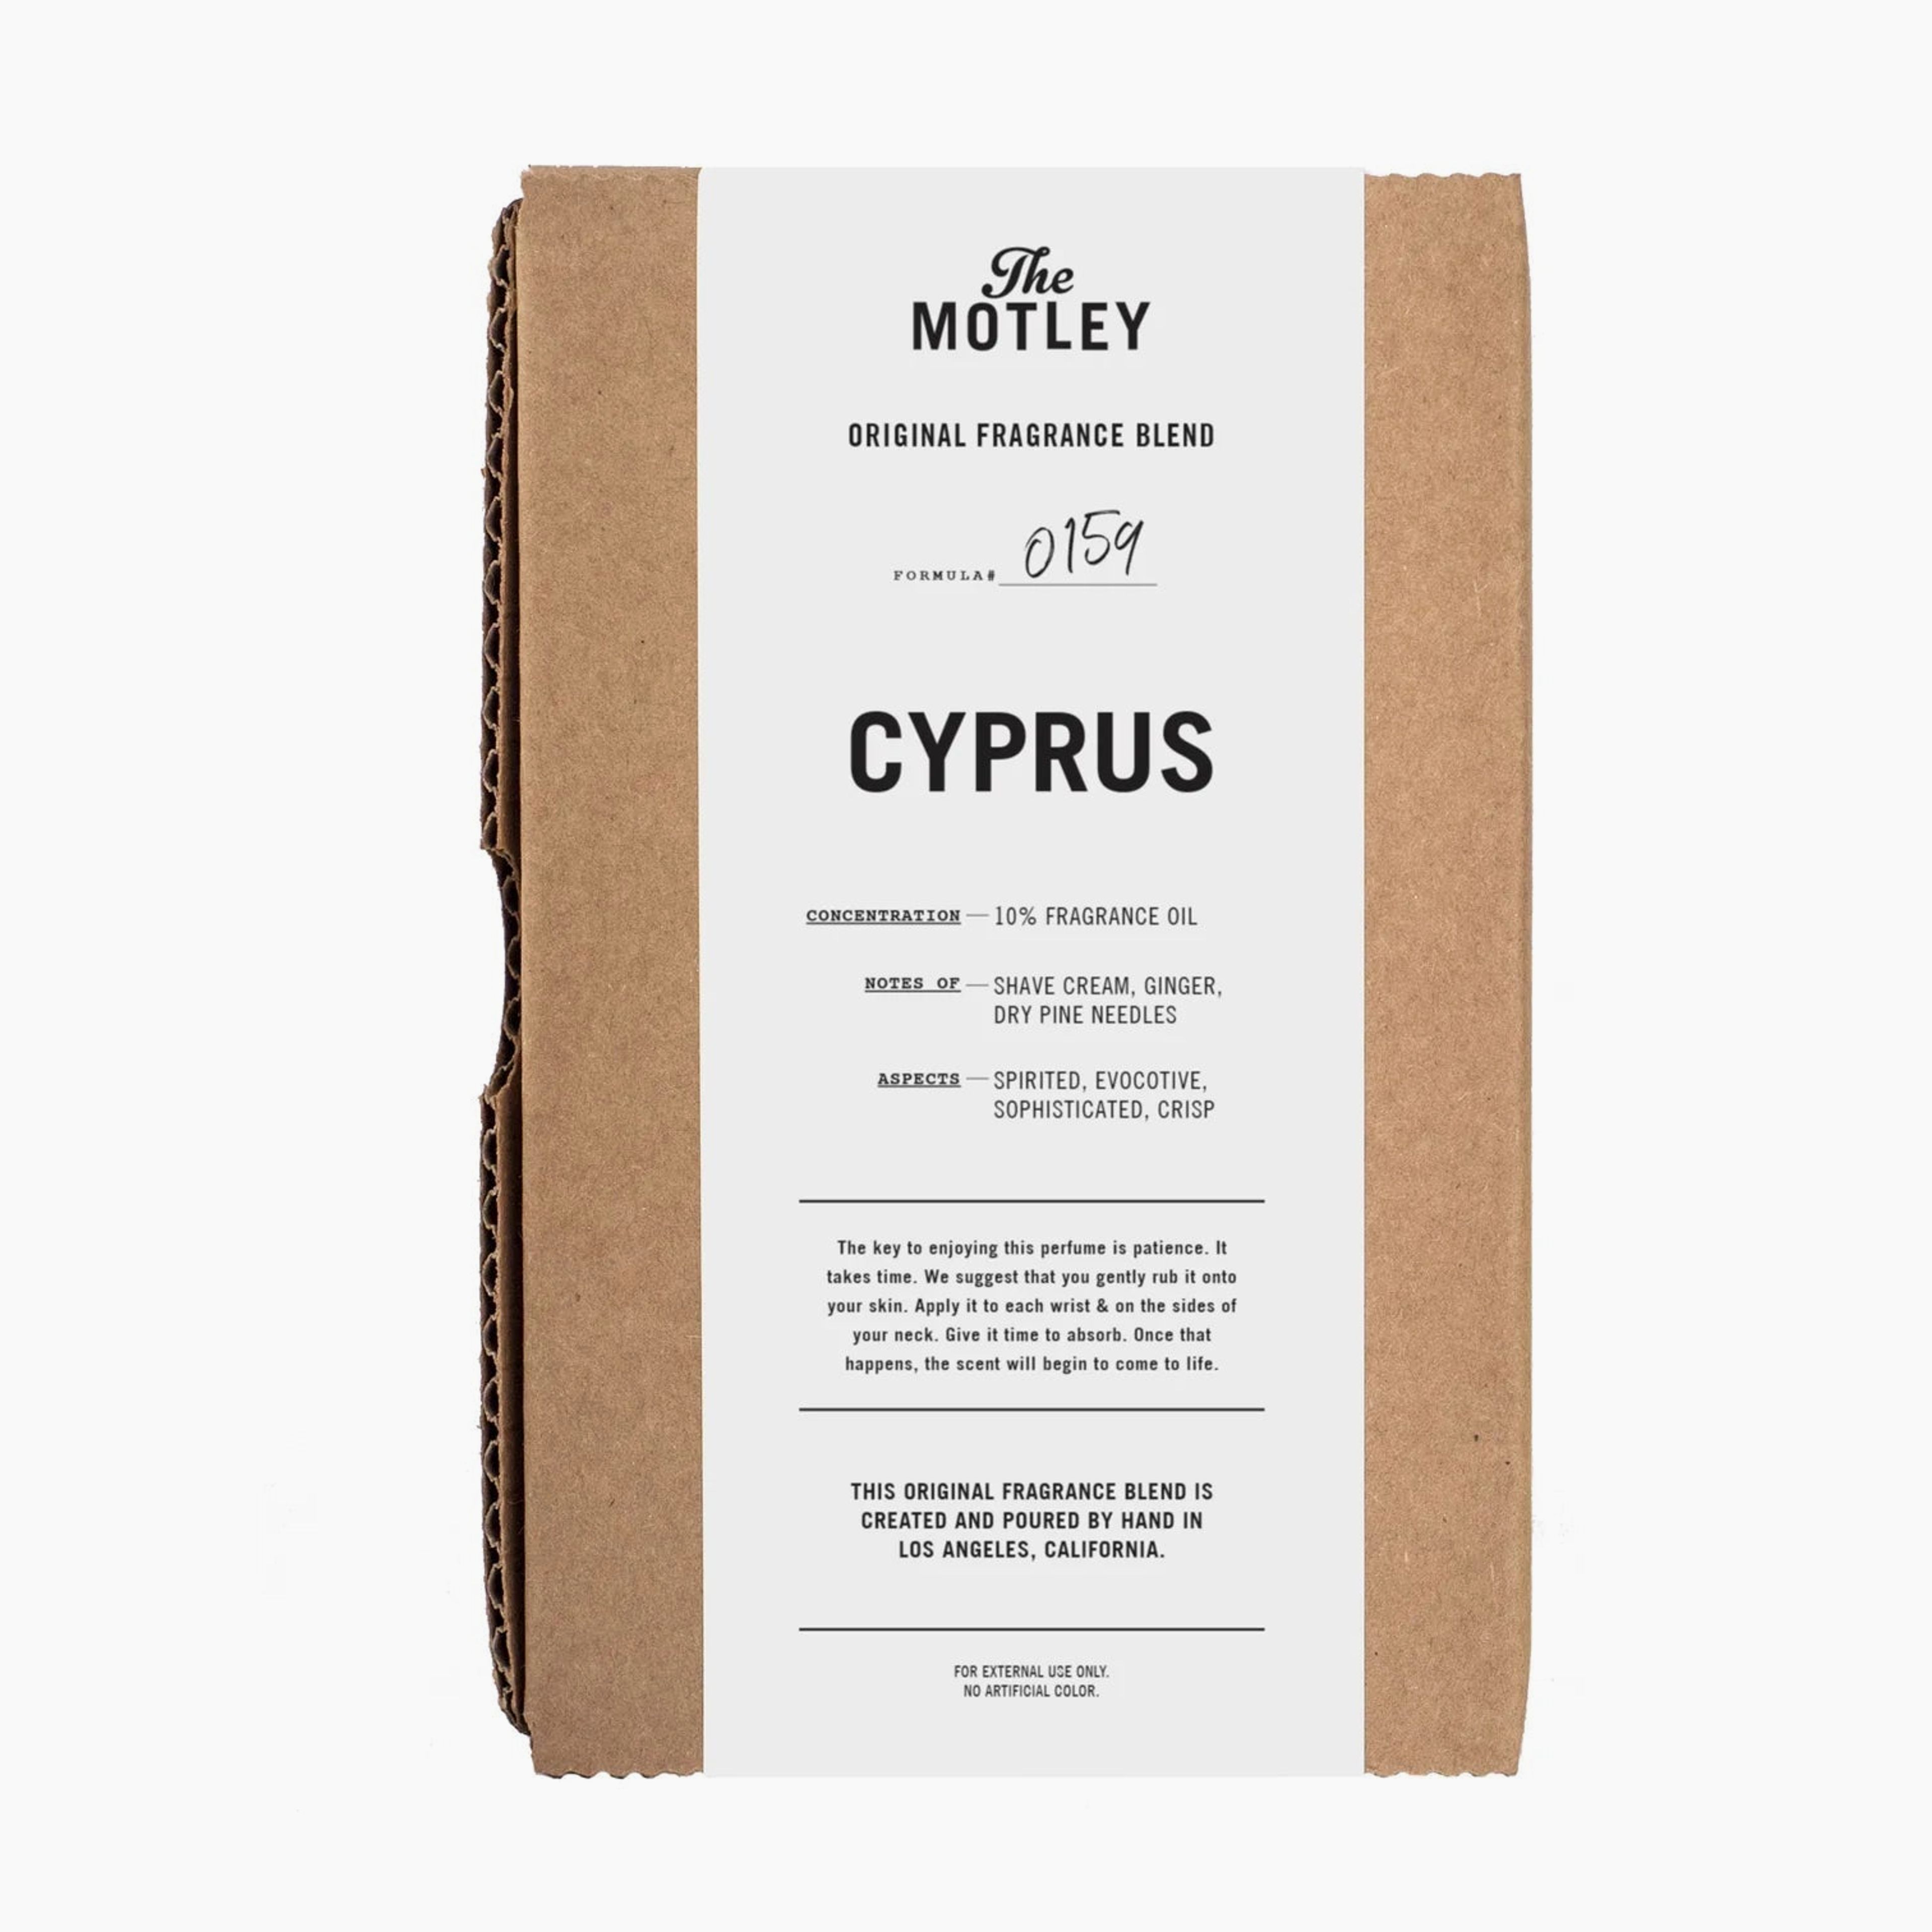 The Motley Cyprus